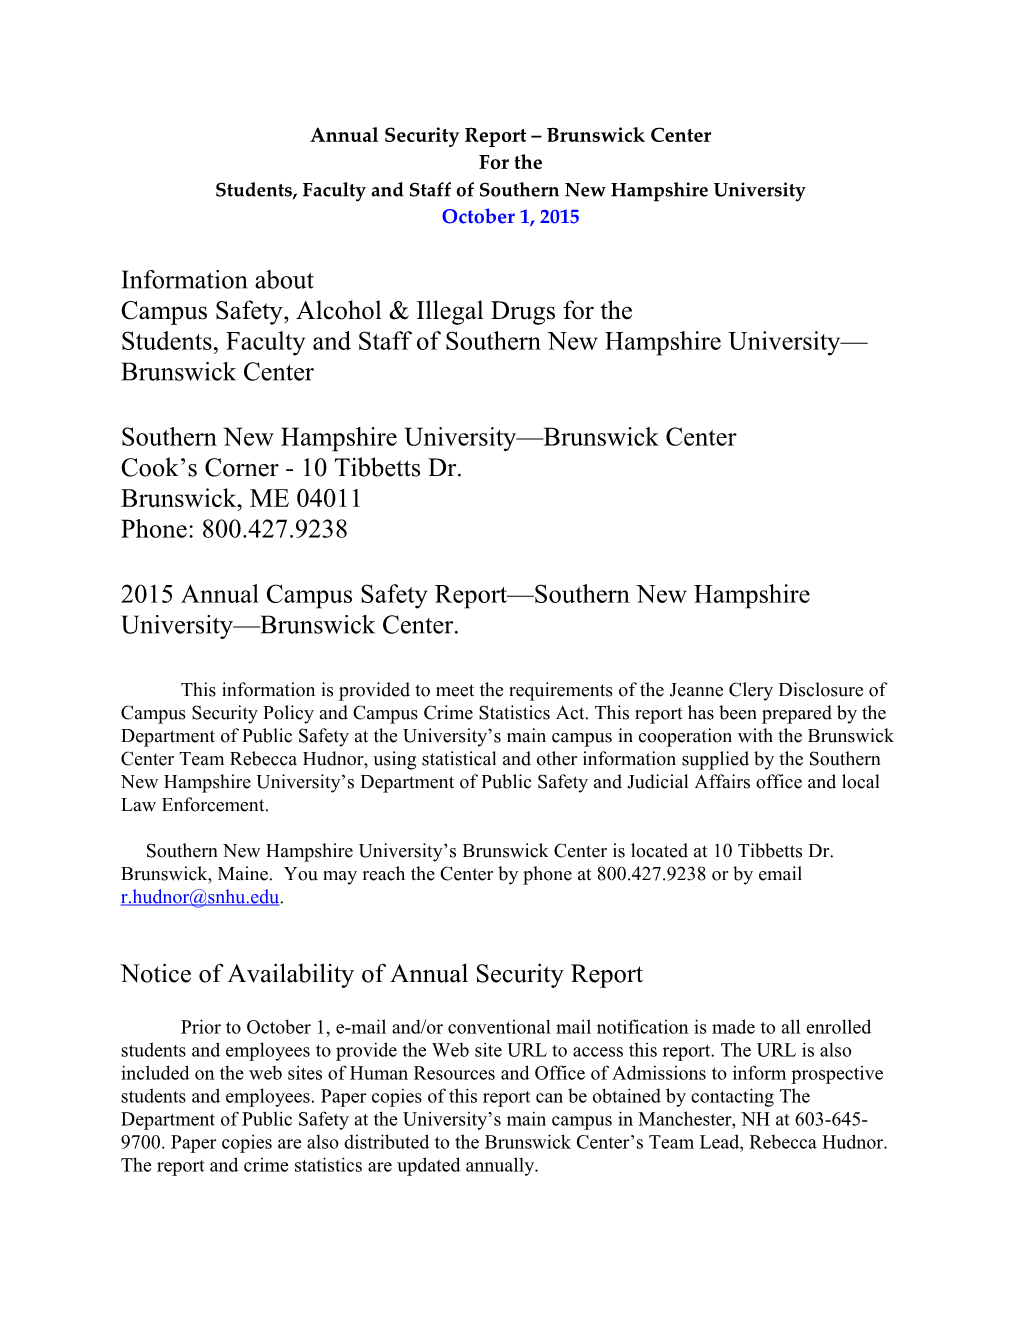 Annual Security Report Brunswick Center